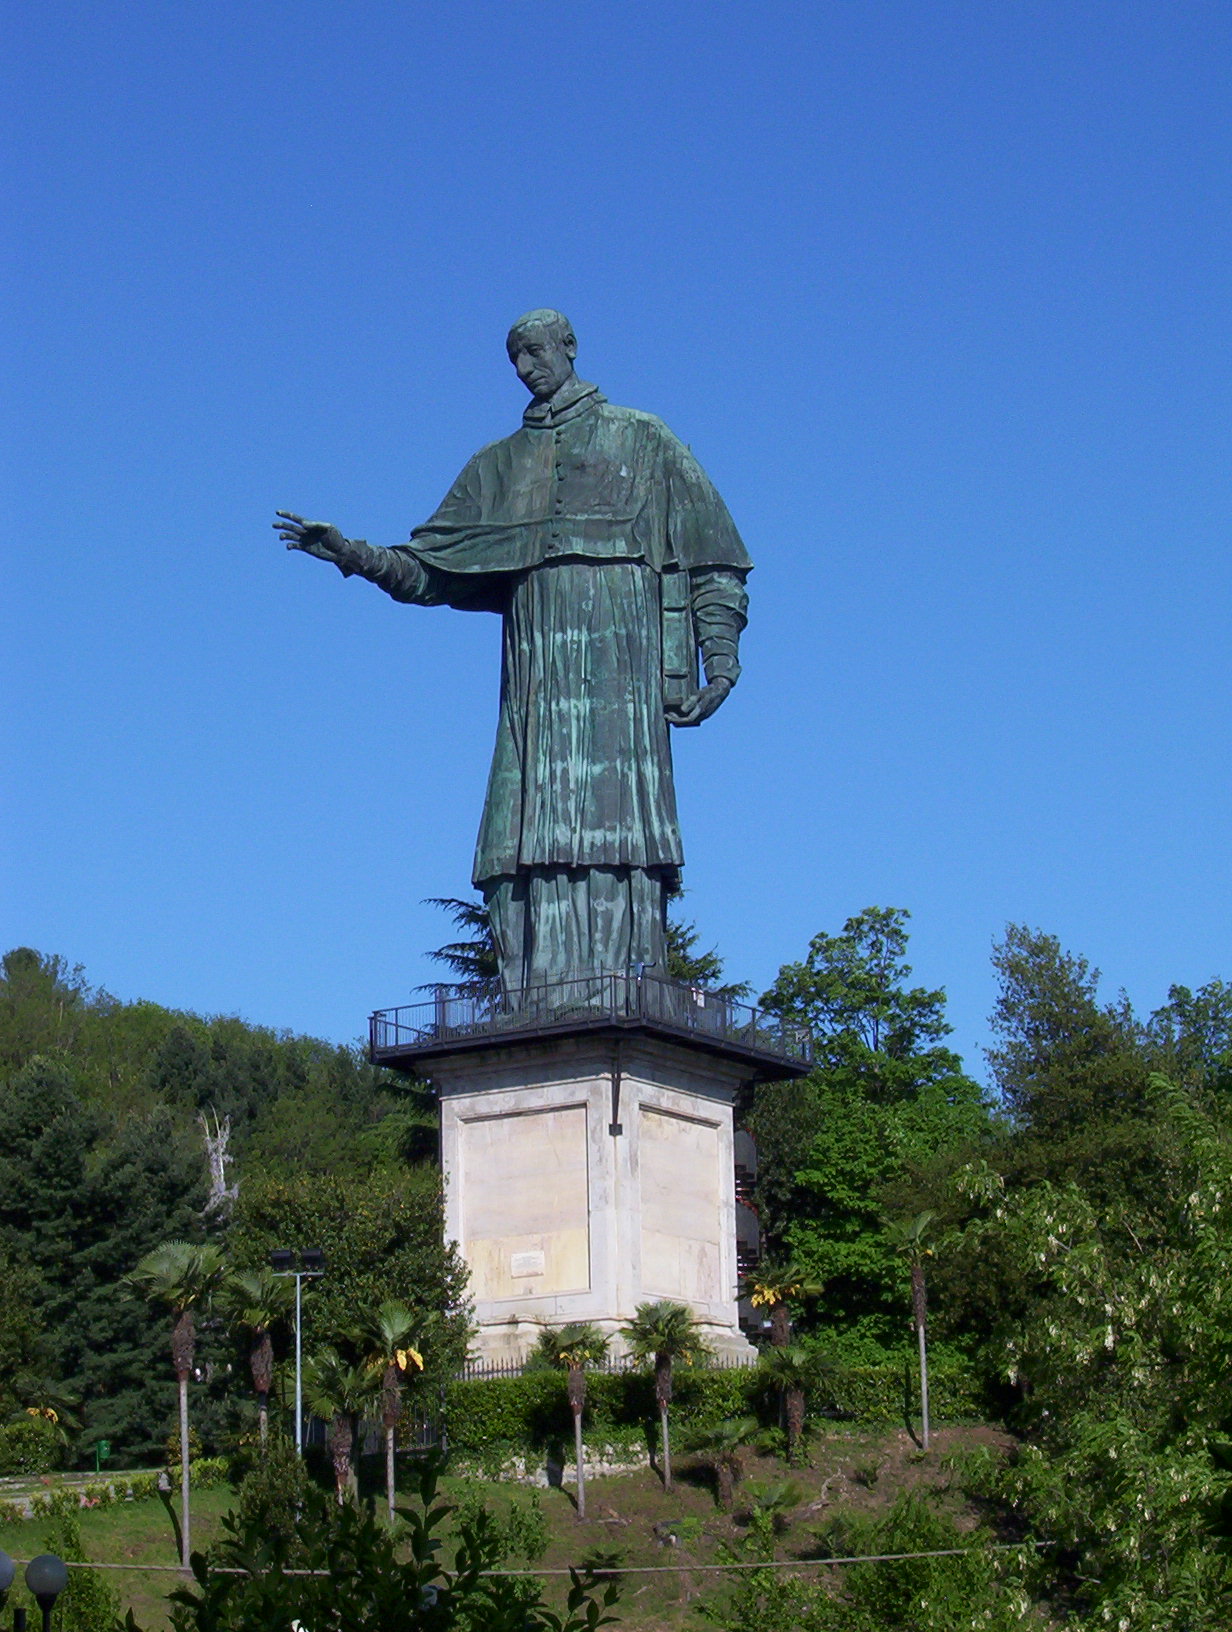 The Colossus of St. Charles Borromeo in Arona